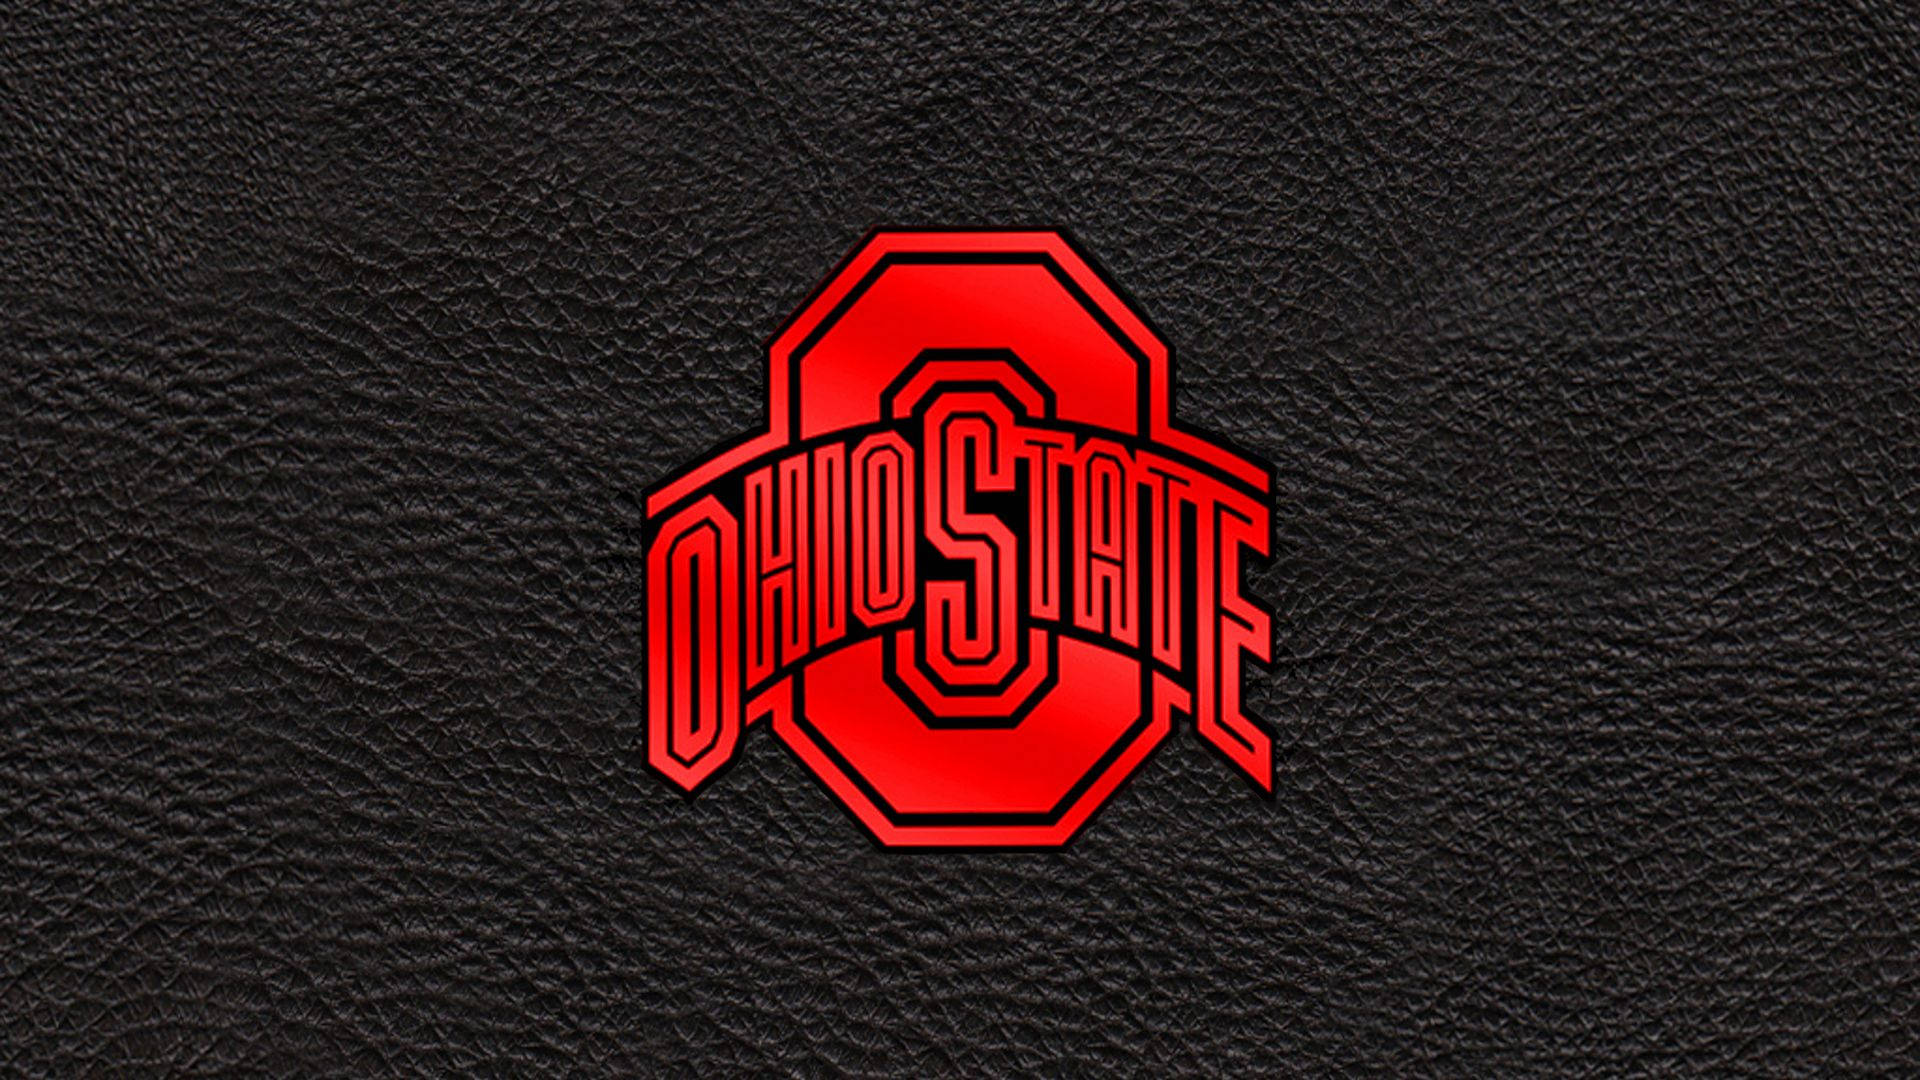 Ohio State Buckeyes Football Game Logo Background